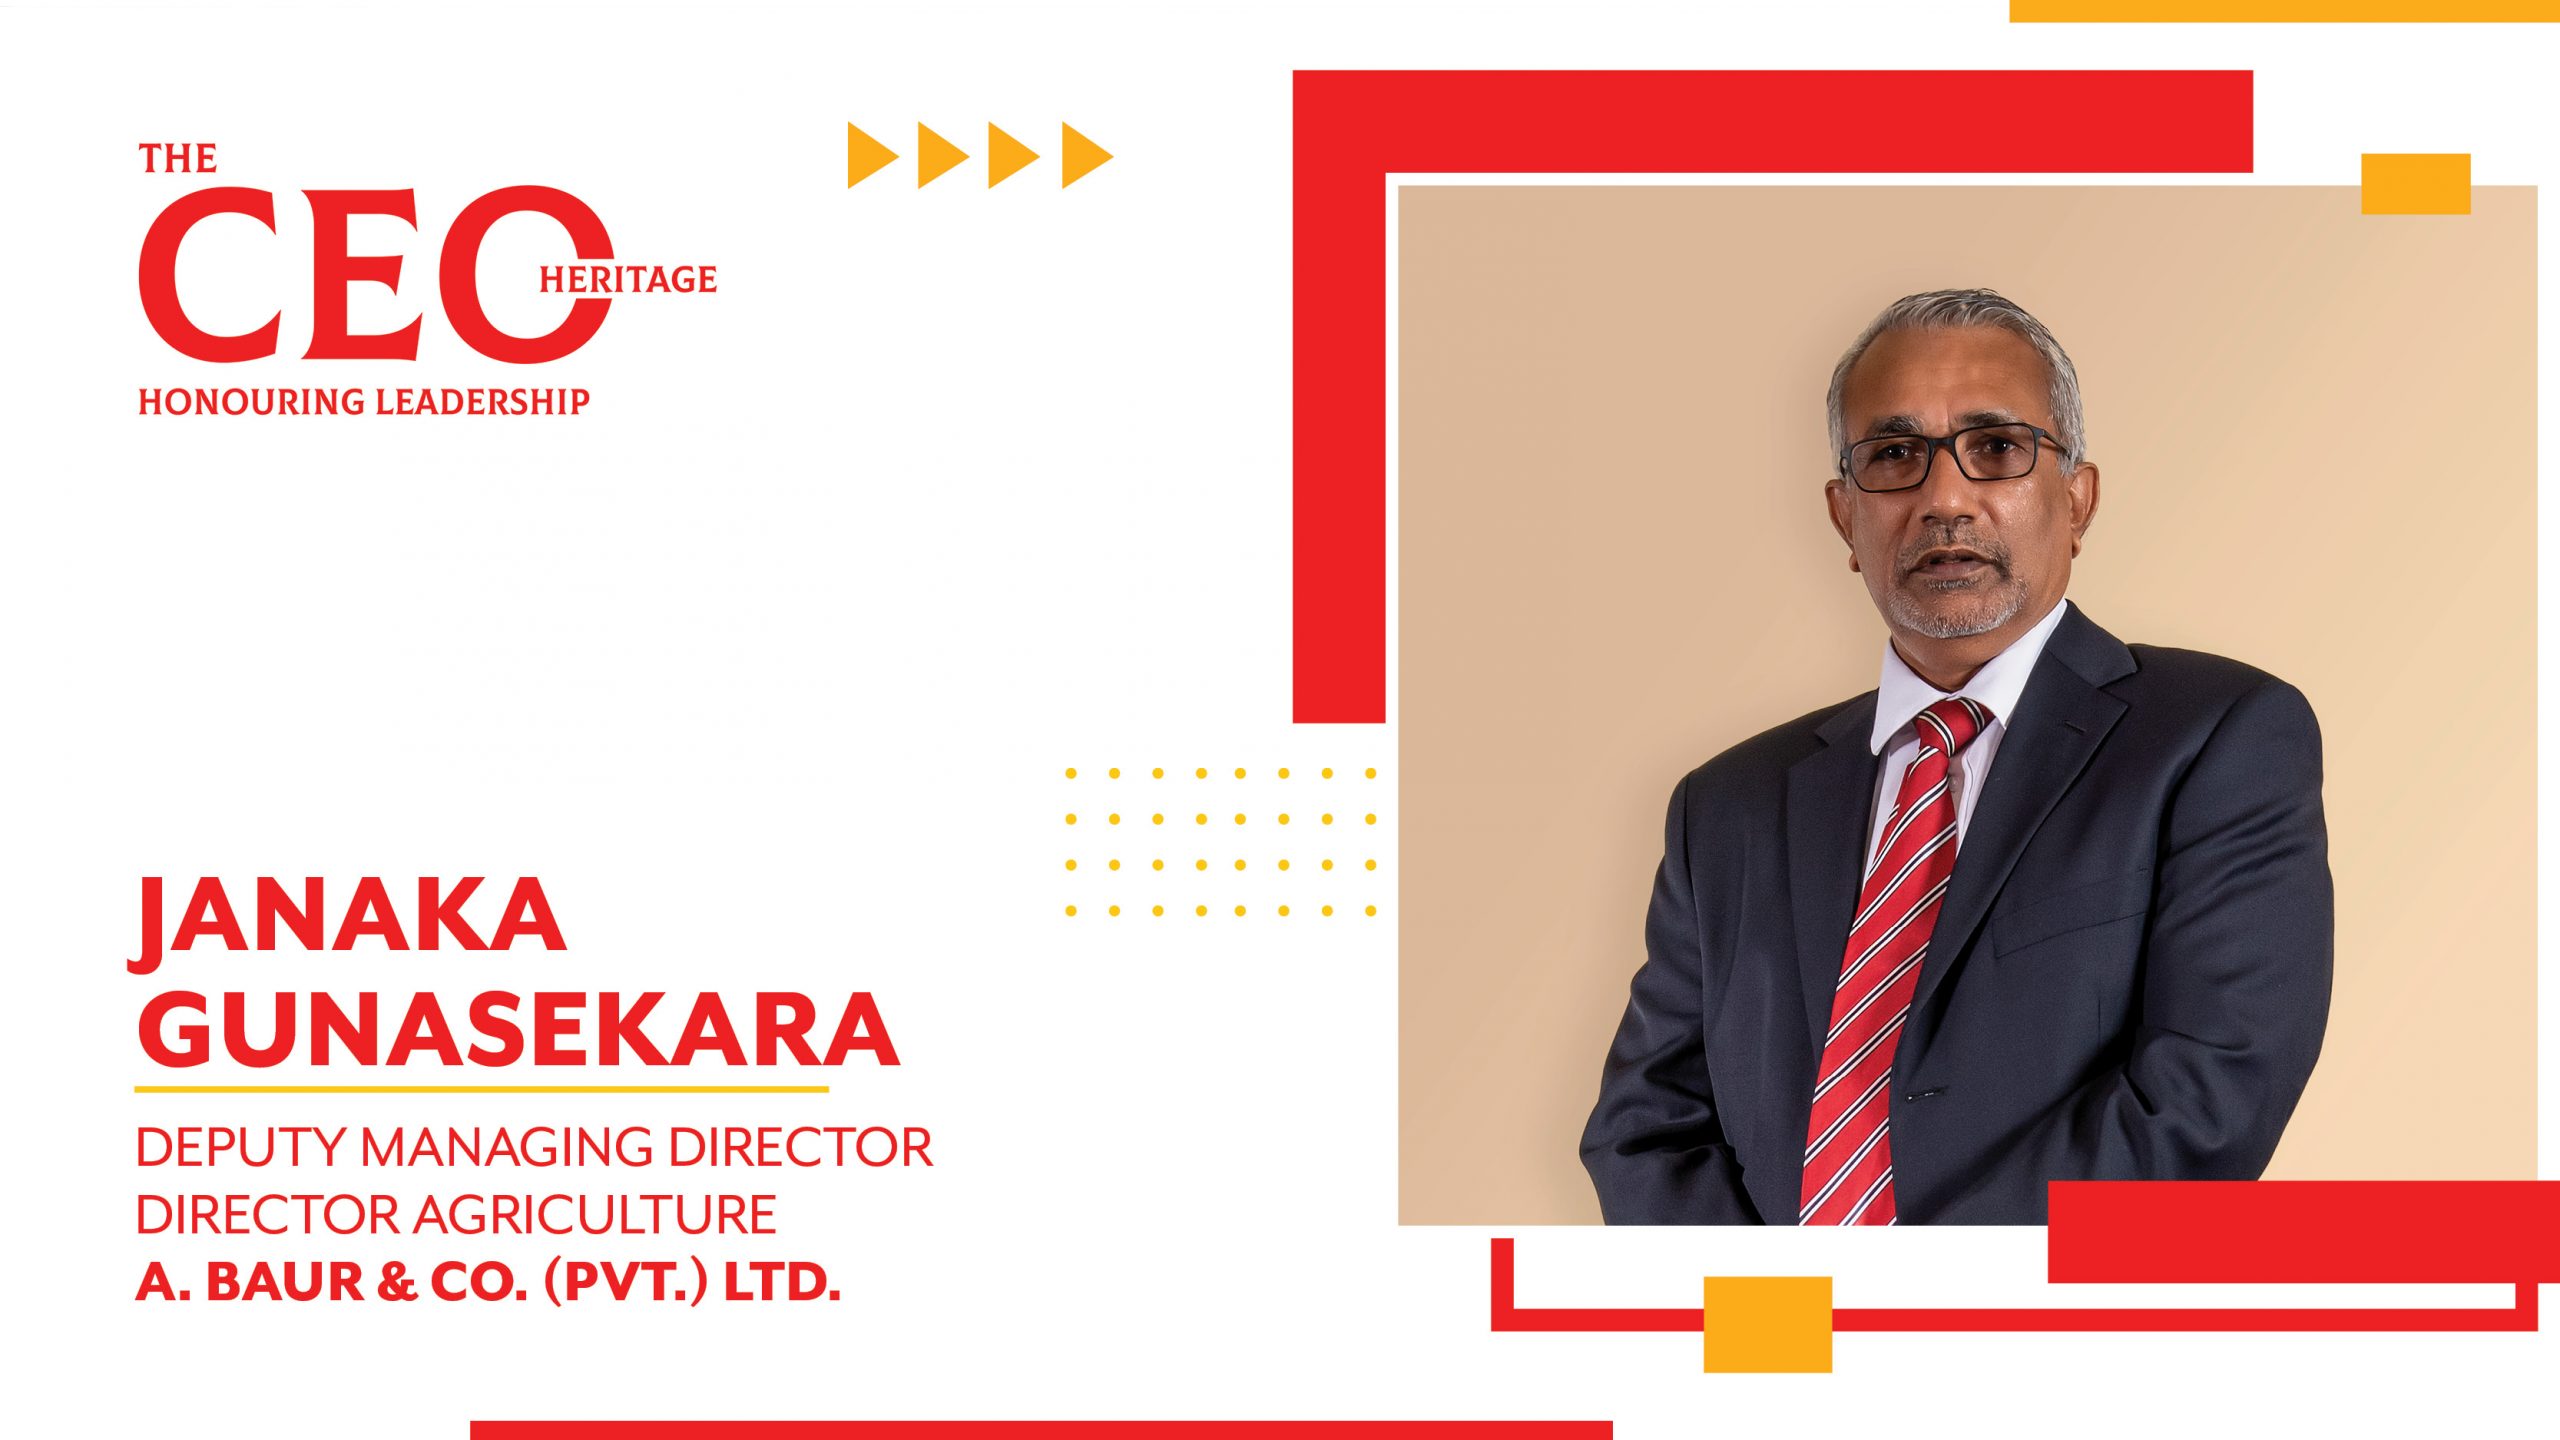 Baurs: An emblematic pioneer in the corporate sector – Deputy Managing Director / Director Agriculture of A. Baur & Co. (Pvt.) Ltd., Janaka Gunasekara